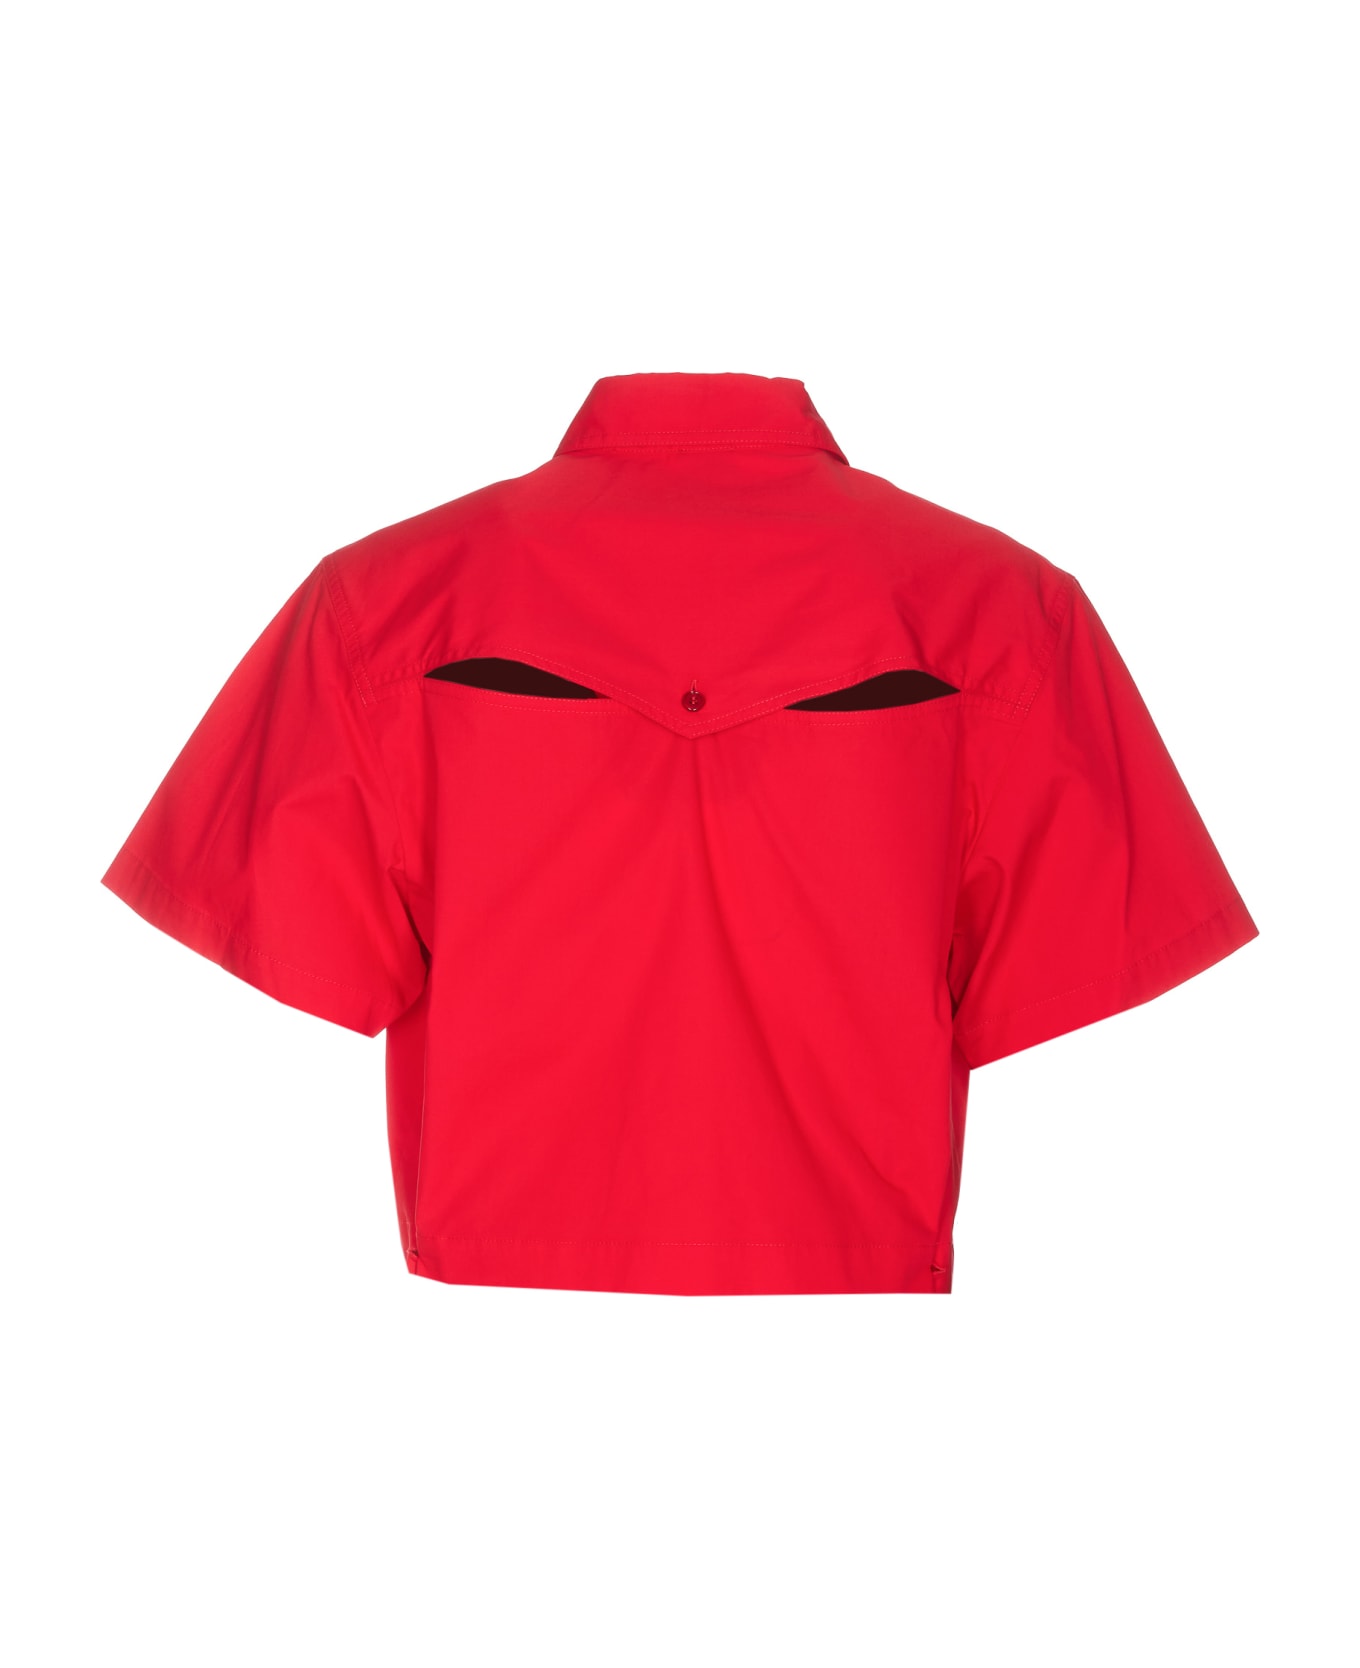 Pinko Castallia Shirt - Red シャツ